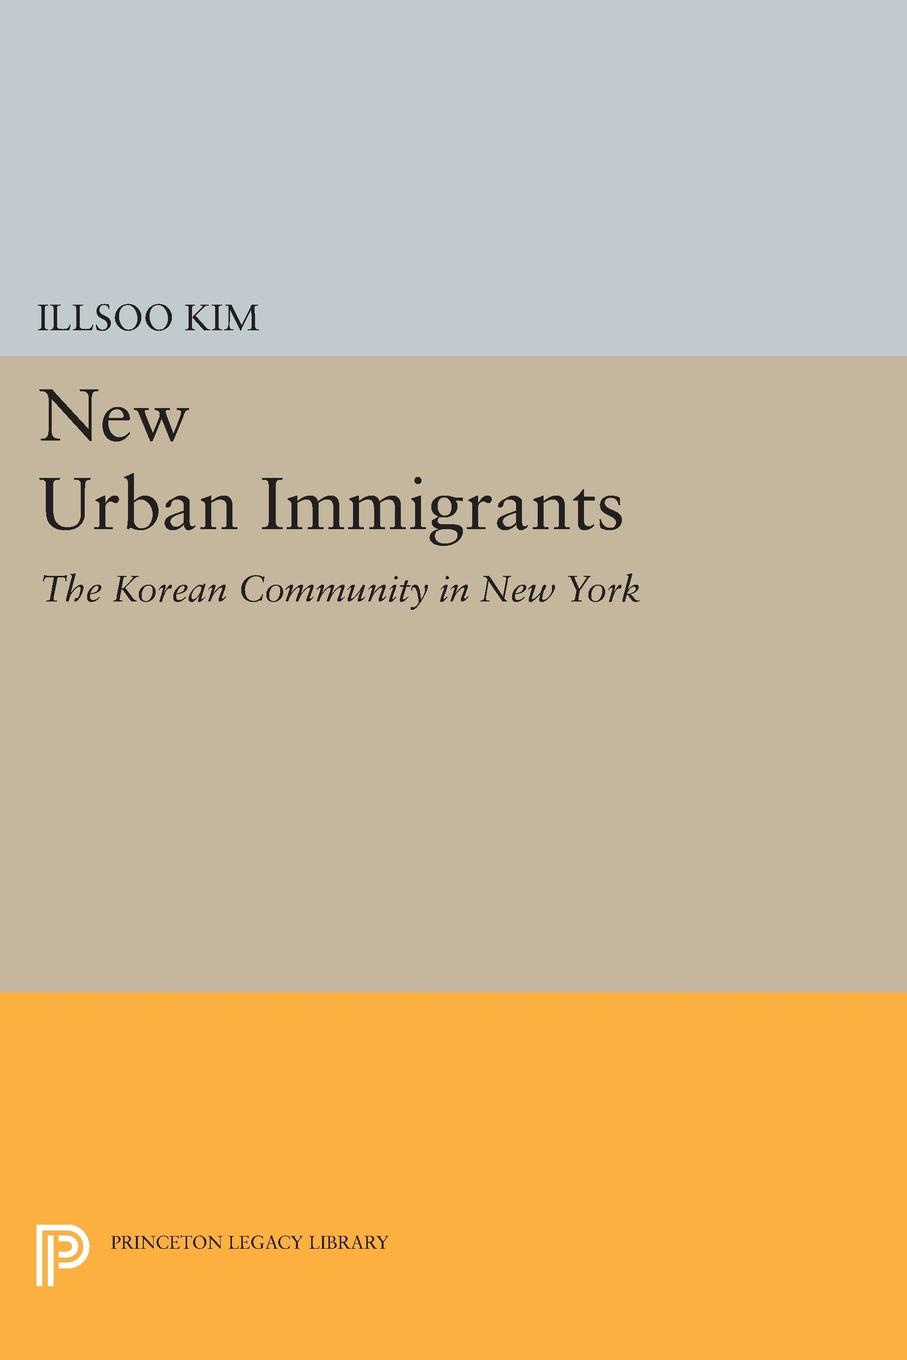 New Urban Immigrants. The Korean Community in New York